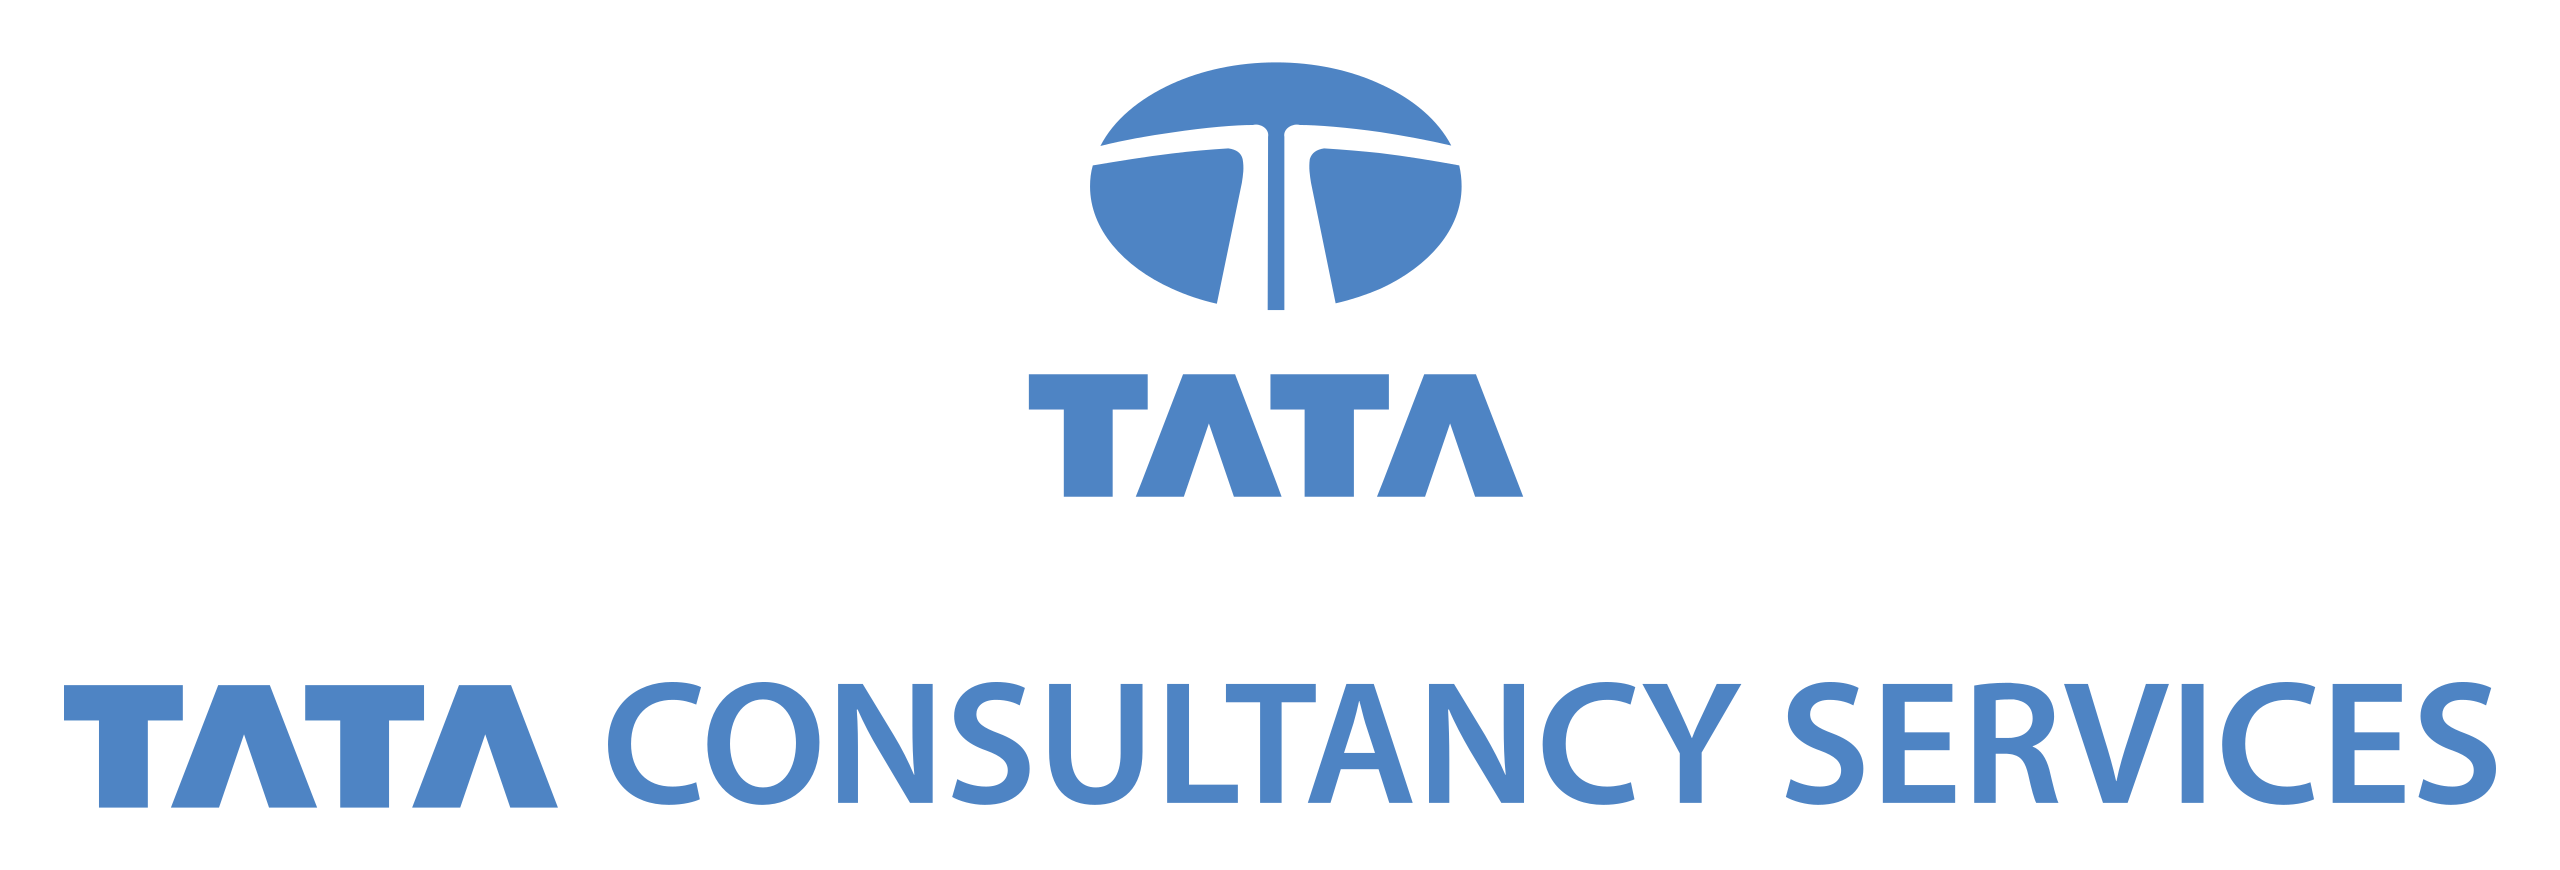 TATA Consultancy_Services_Logo